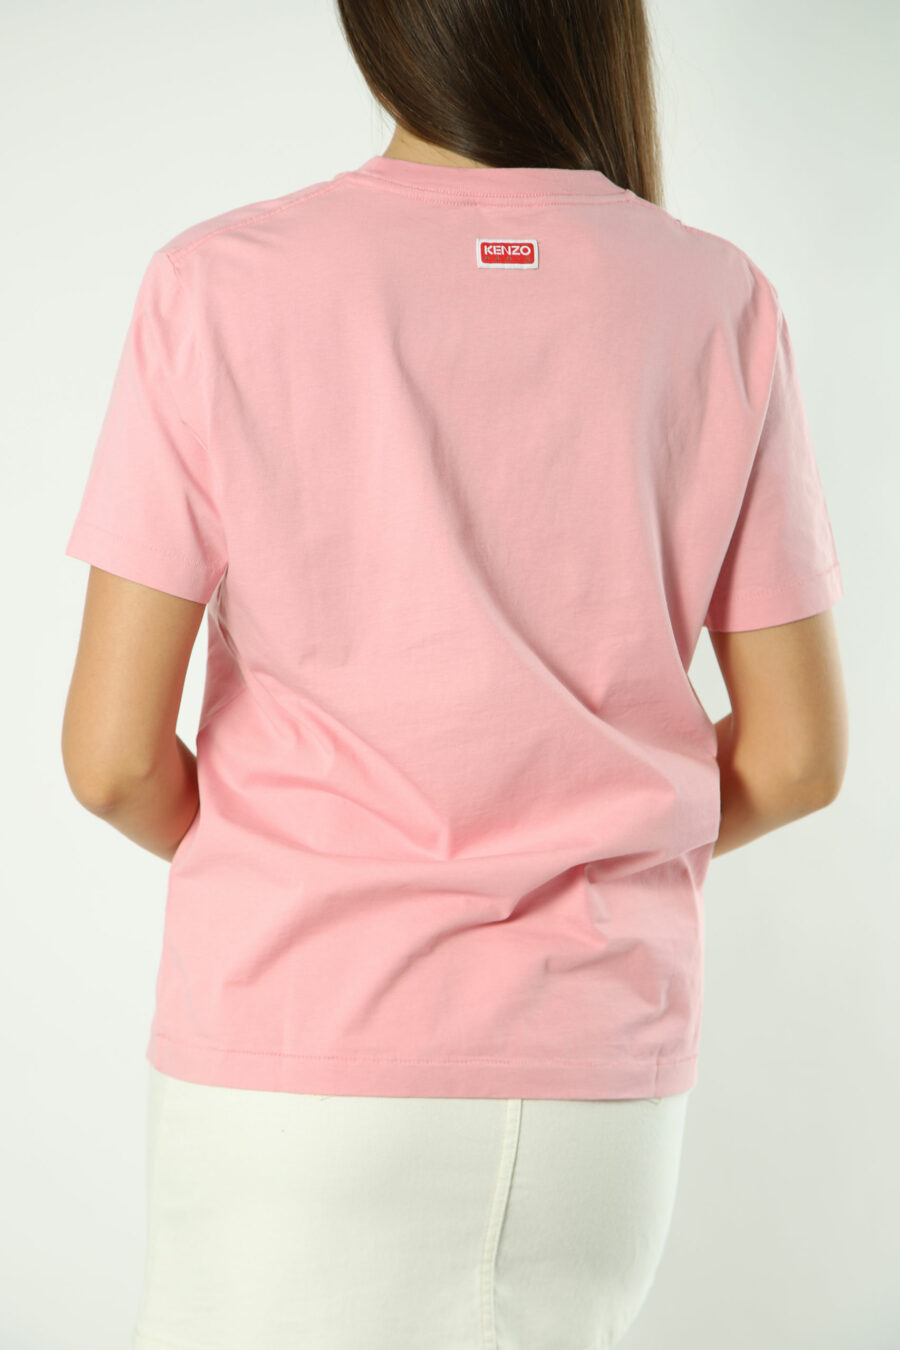 Pink T-shirt with orange flower maxilogo - Photos 1404